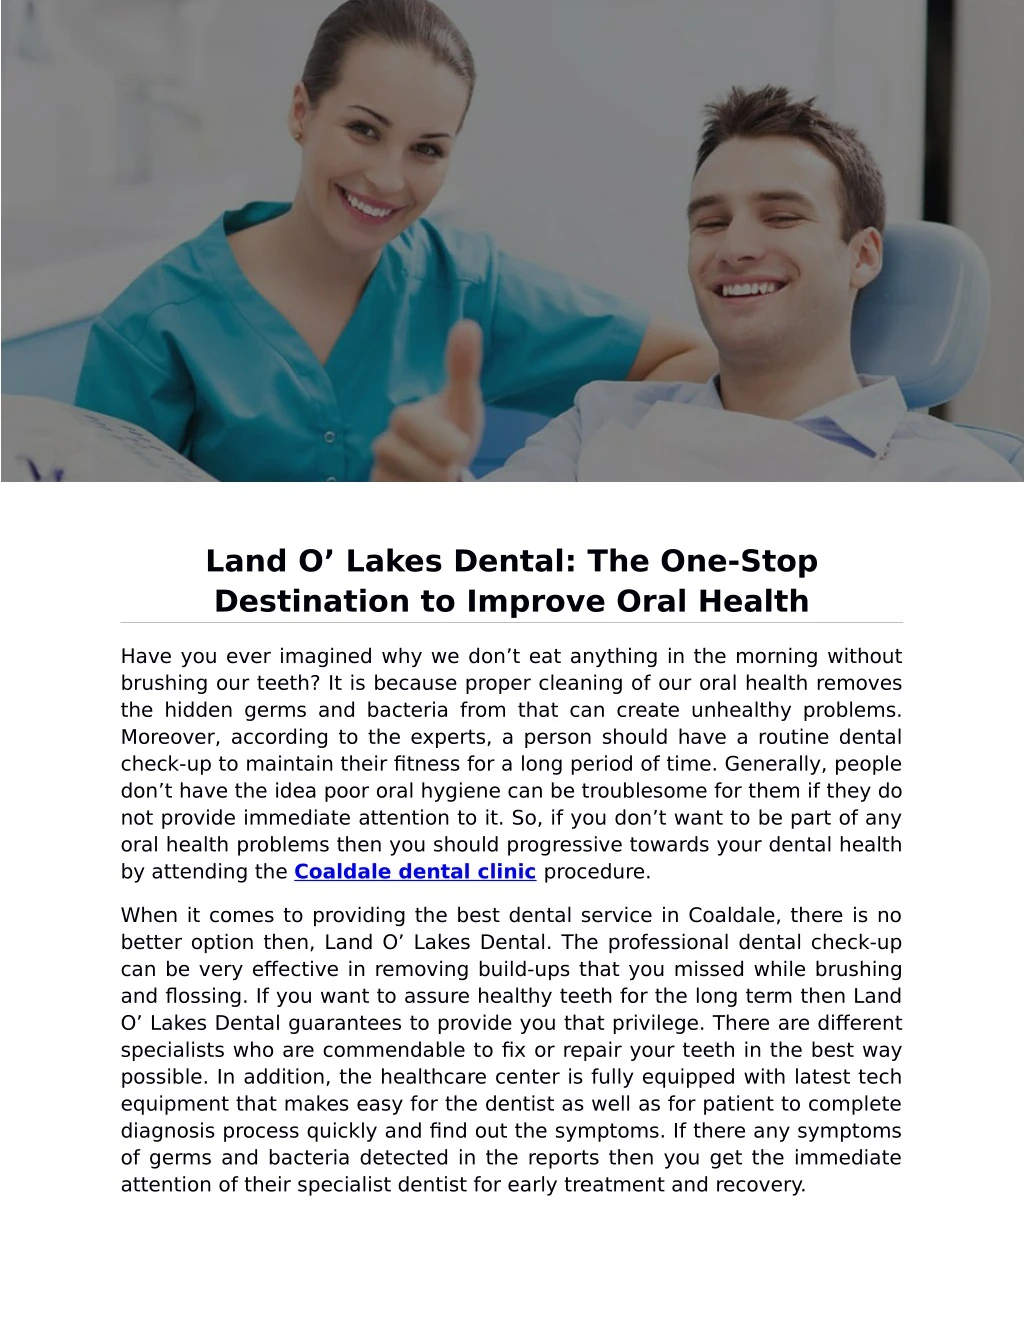 land o lakes dental the one stop destination